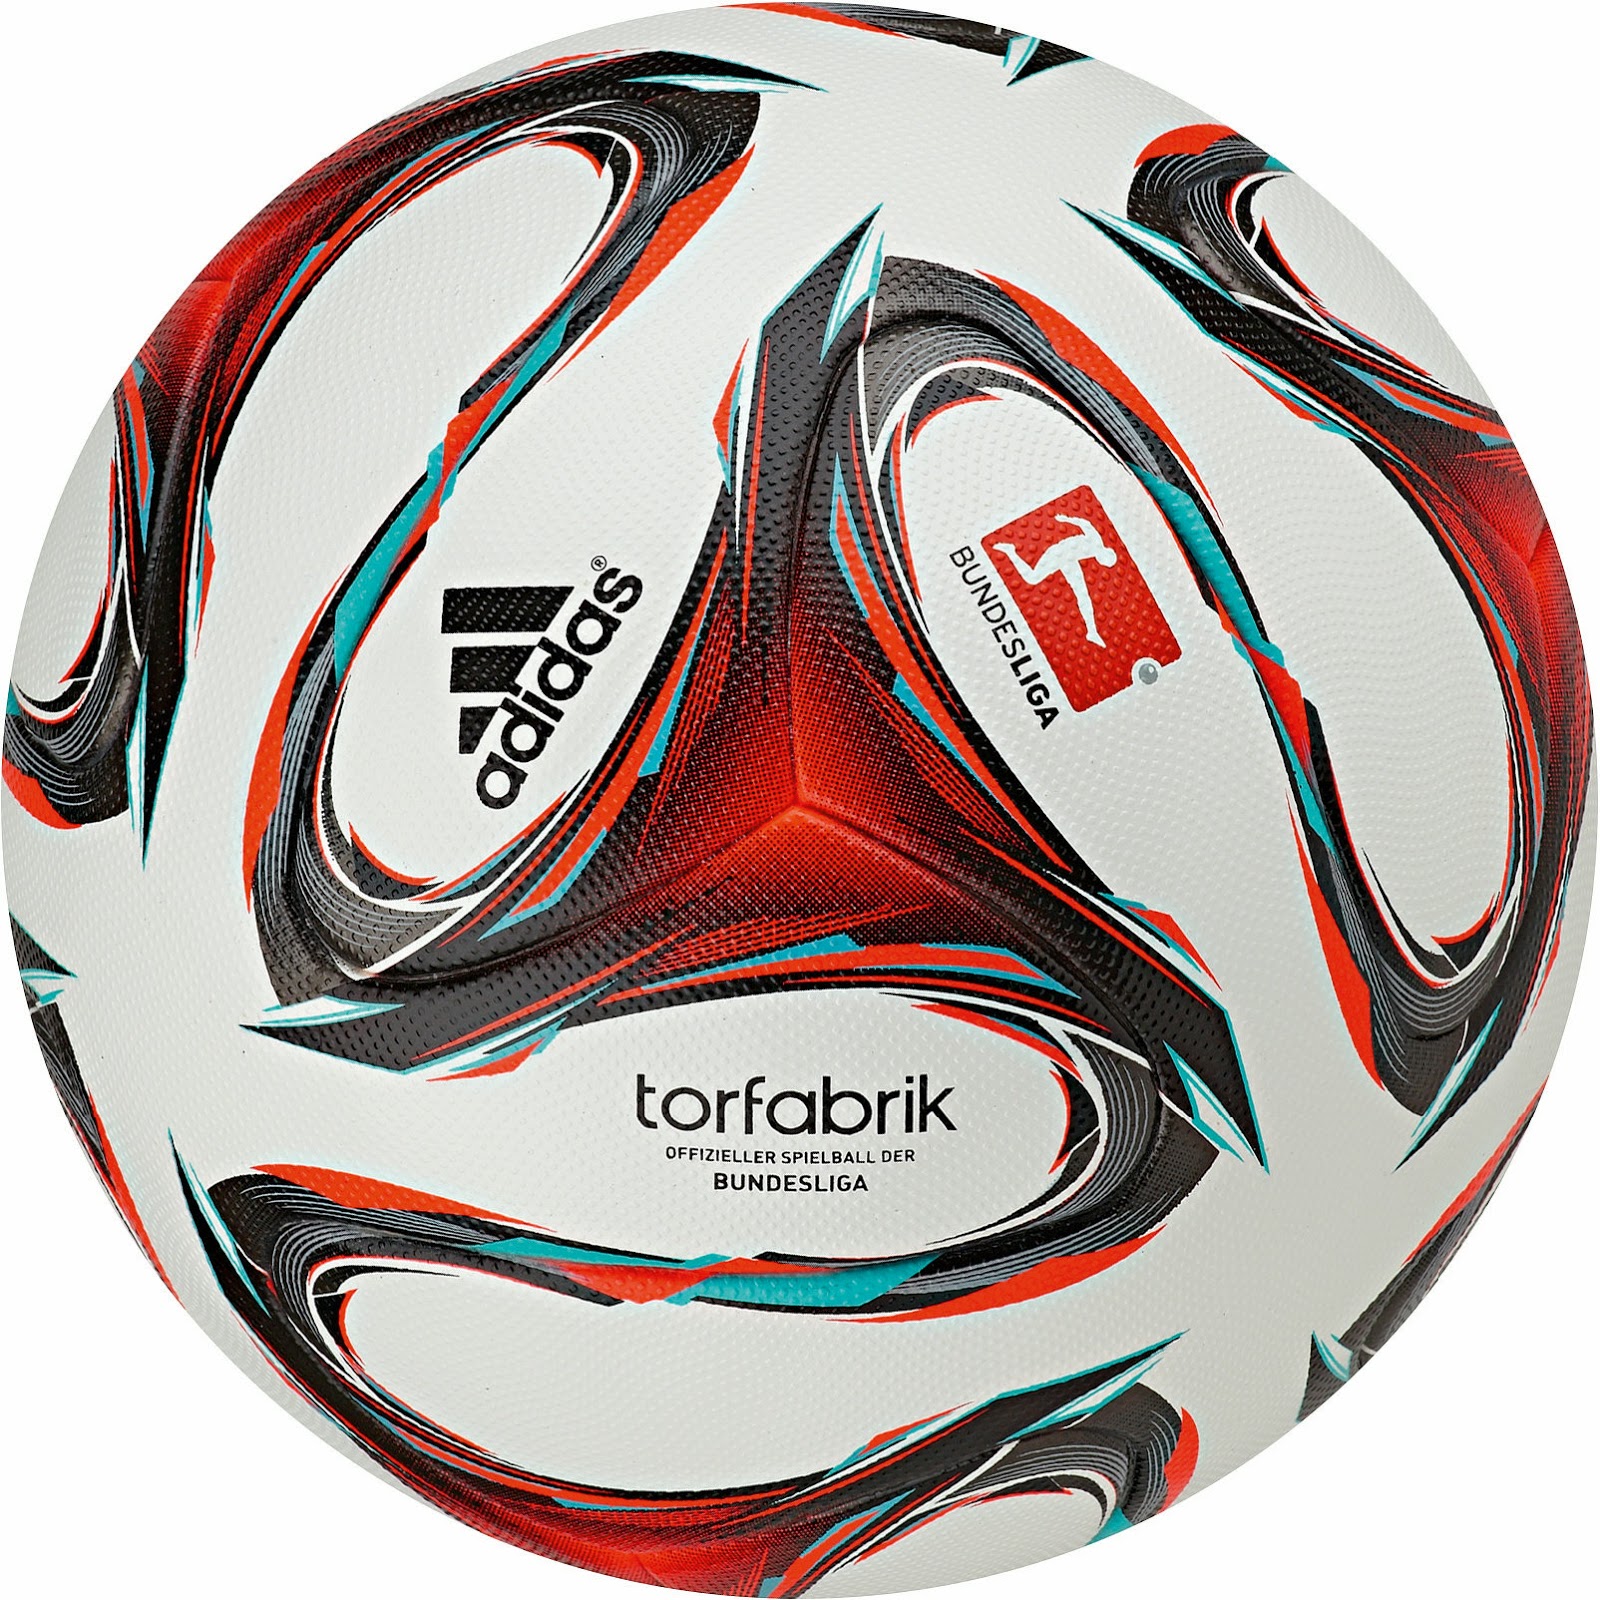 Catarata Irónico tierra Adidas Torfabrik Bundesliga 14-15 Ball Released - Footy Headlines